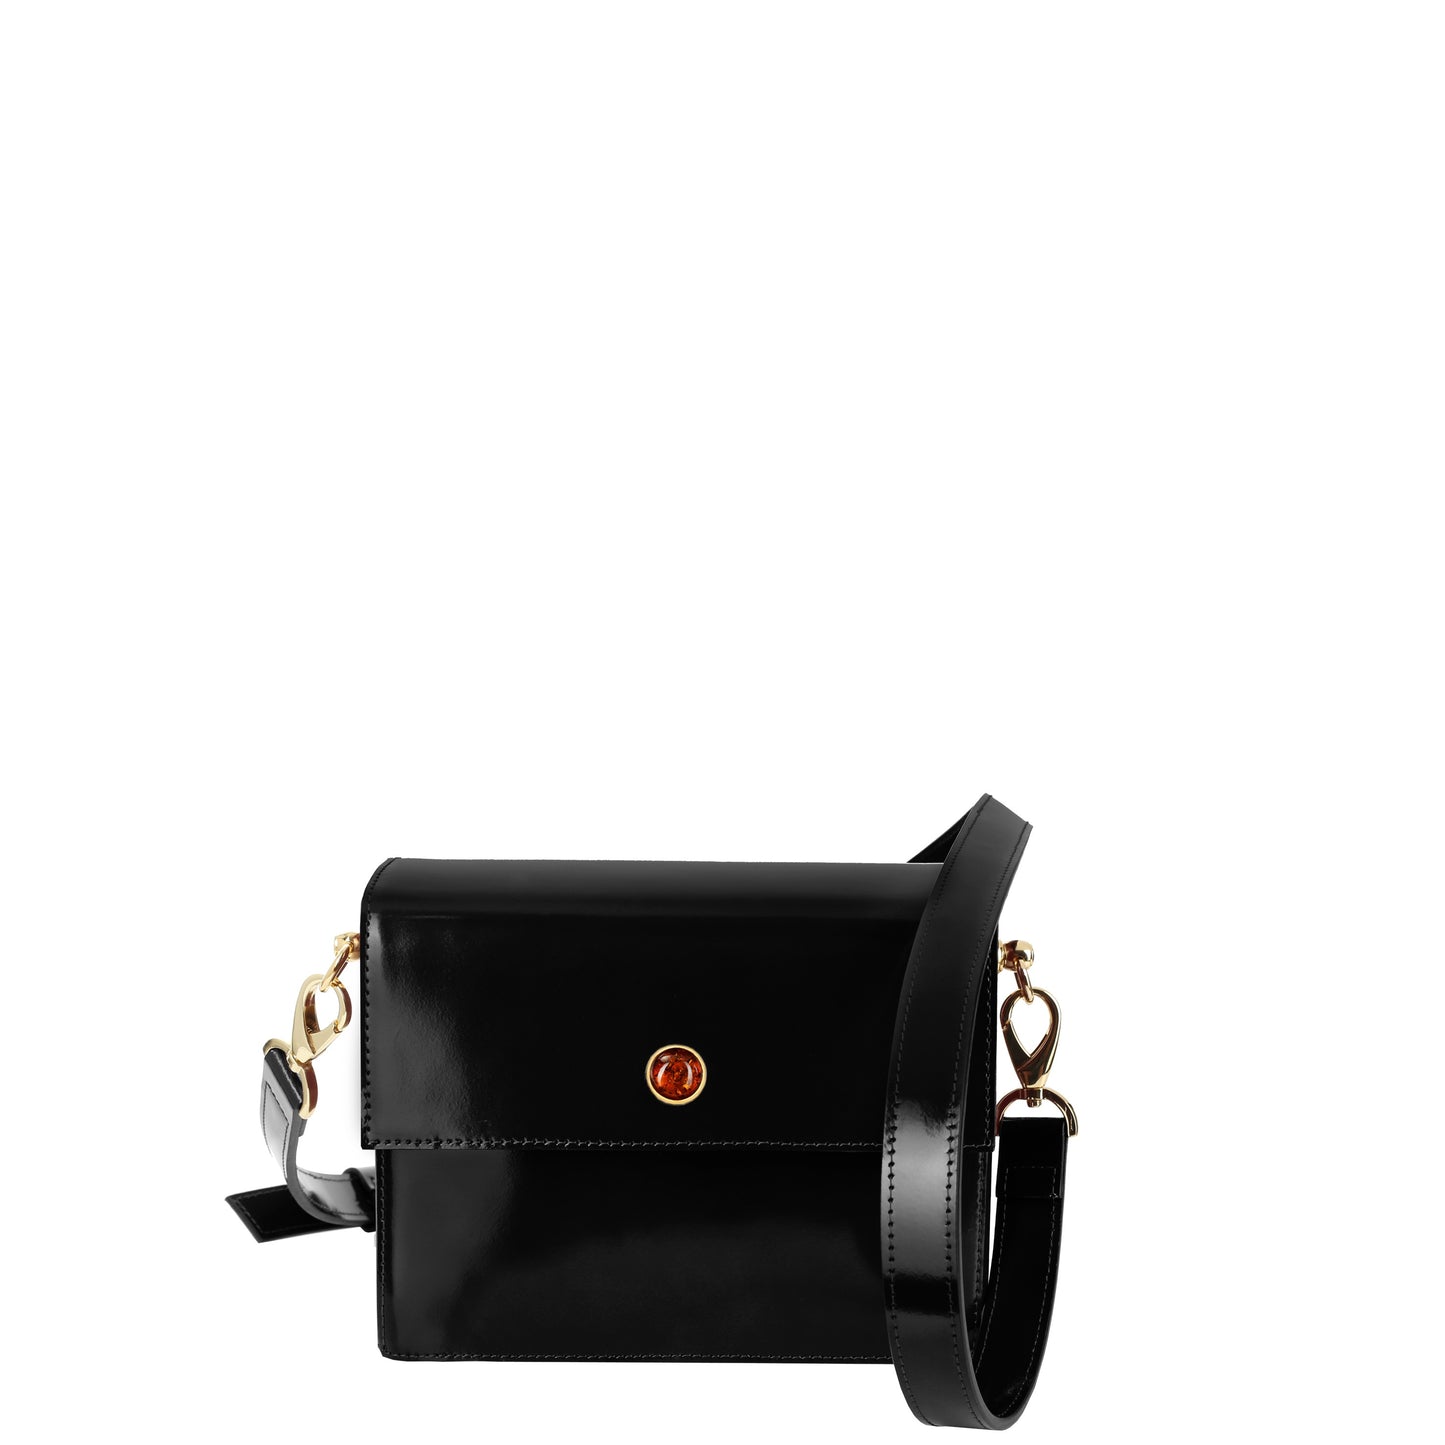 LOWE SPECCHIO BLACK women's leather handbag